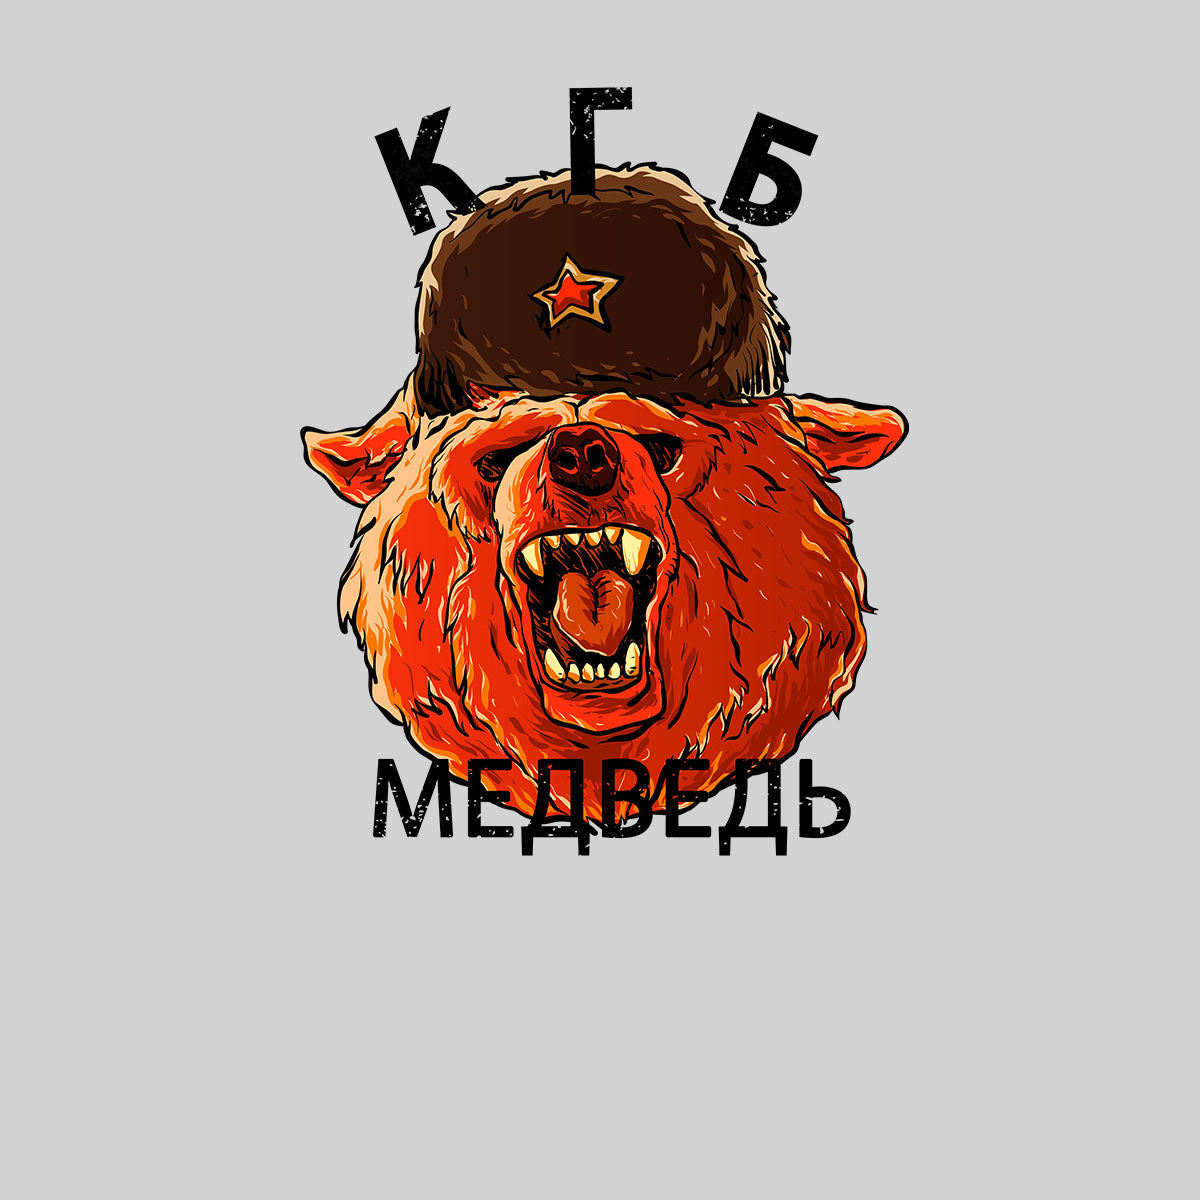 KGB Russian Bear Soviet Union Secret Spy Agency Symbol Soviet Union Nostalgia Unisex T-shirt - Kuzi Tees